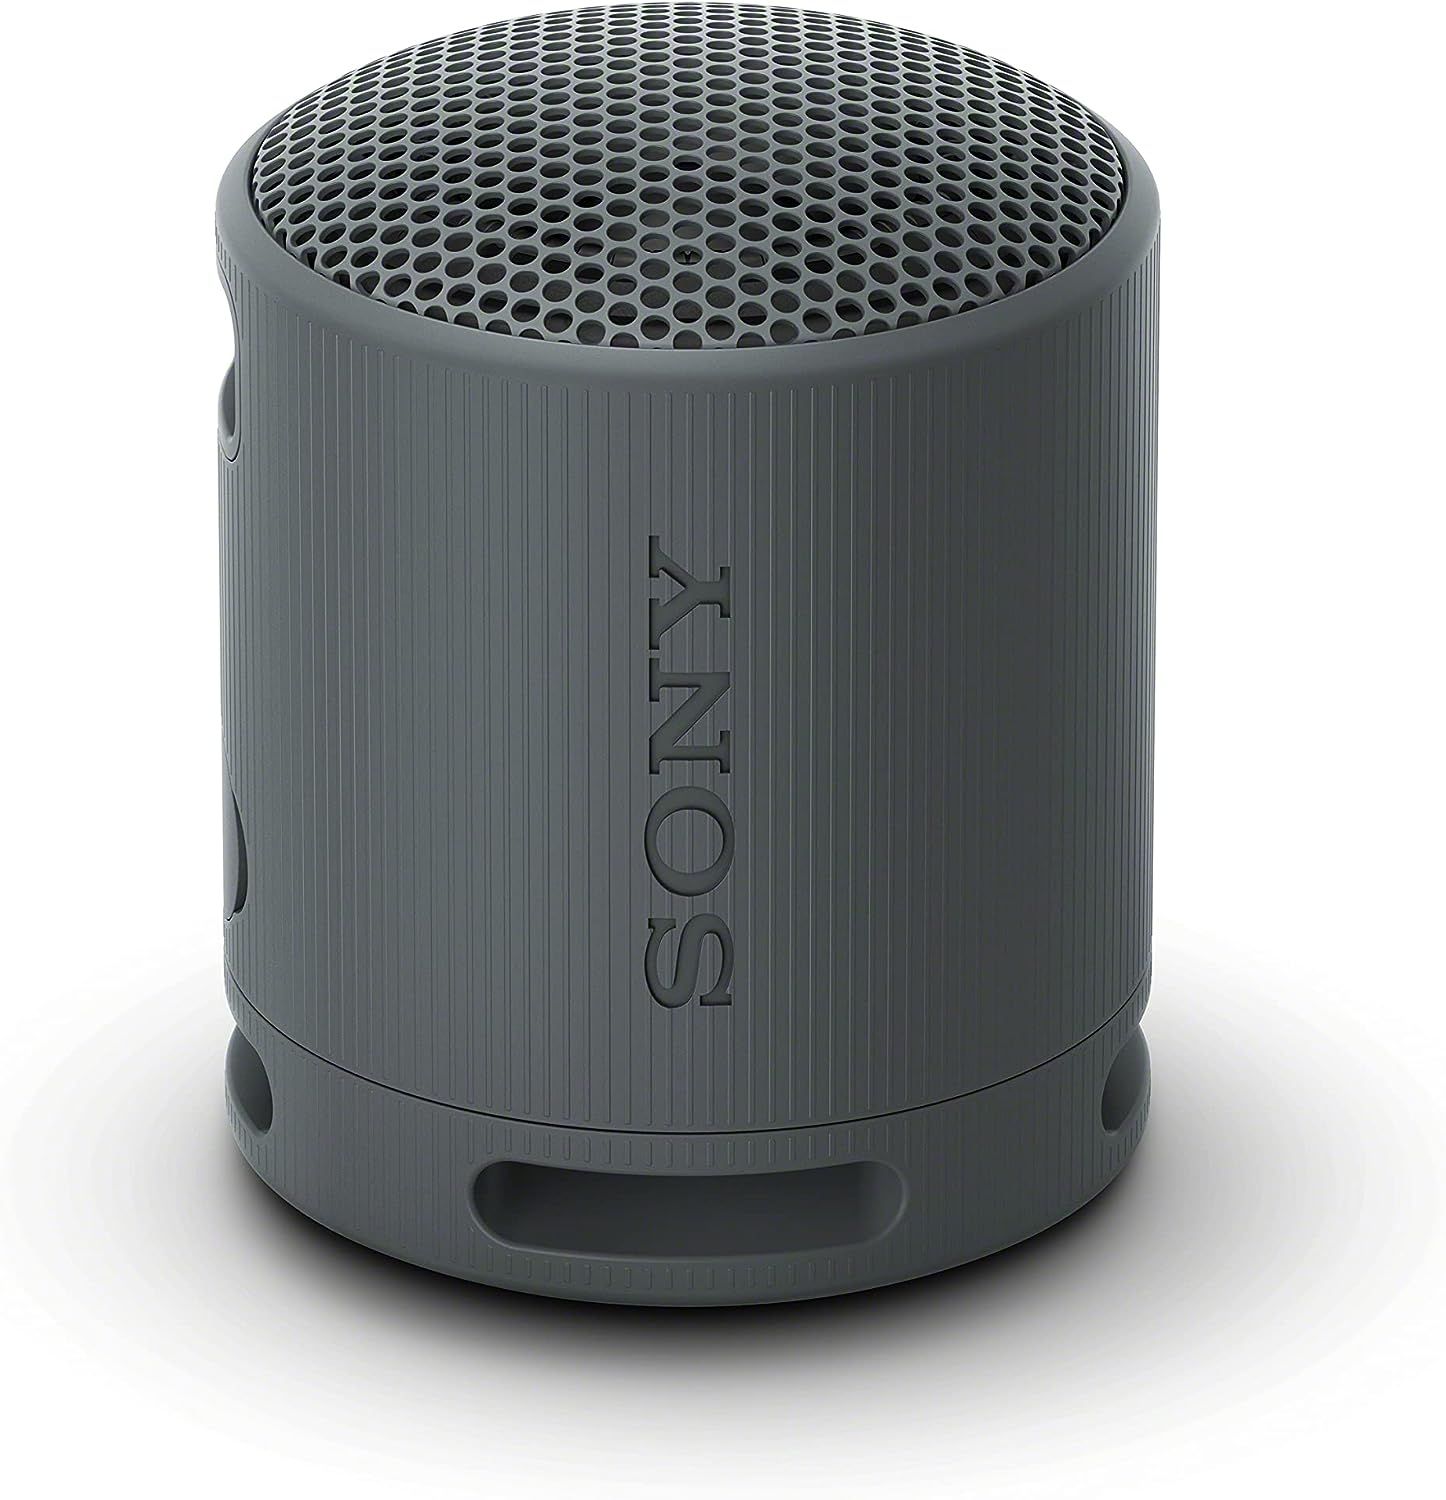 Gray Sony SRS-XB100 Portable Speaker on a white background